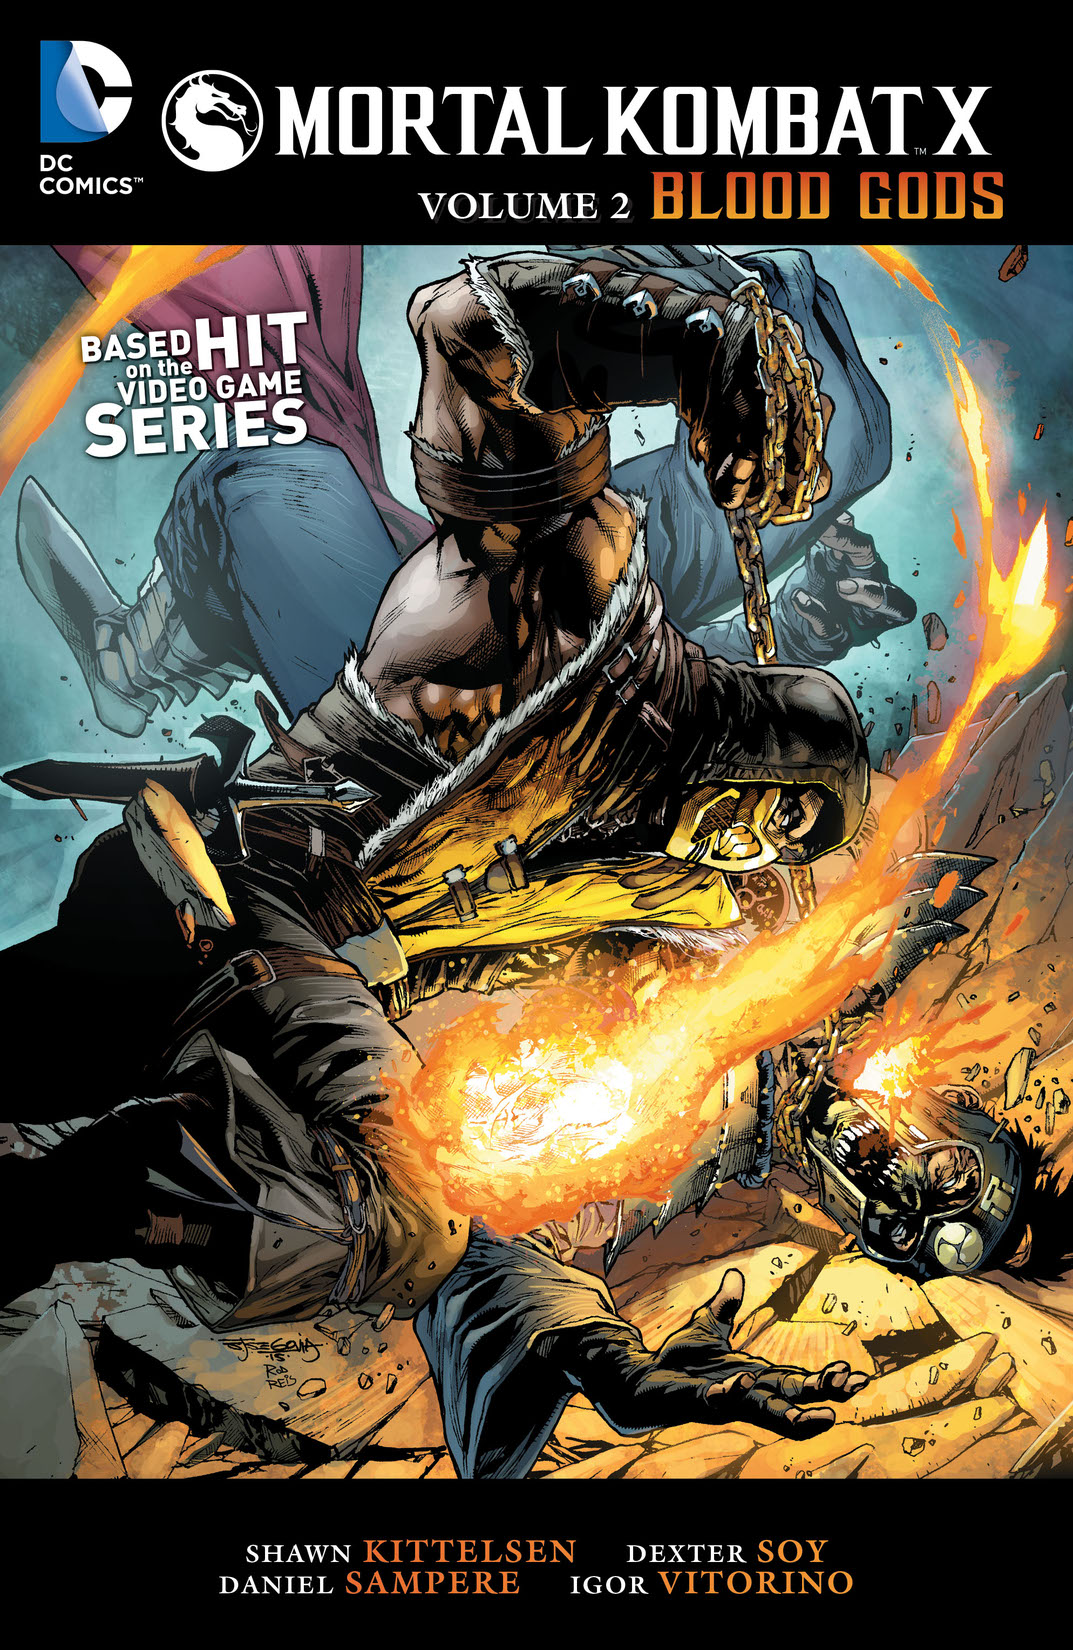 Mortal Kombat X Vol. 2 preview images